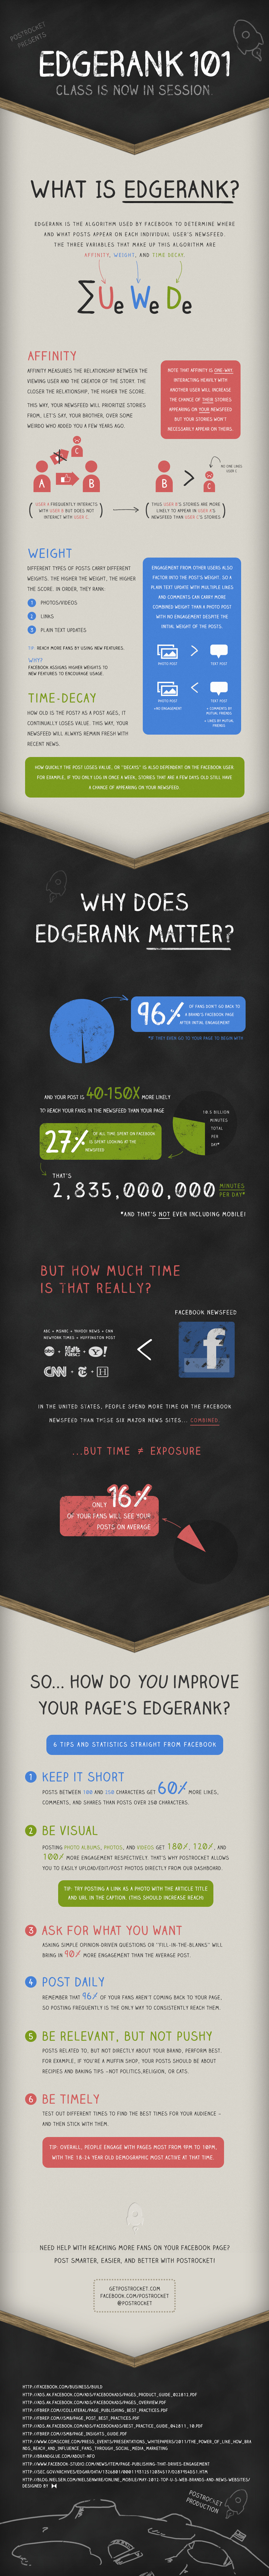 postrocket-facebook-edgerank-infographic1